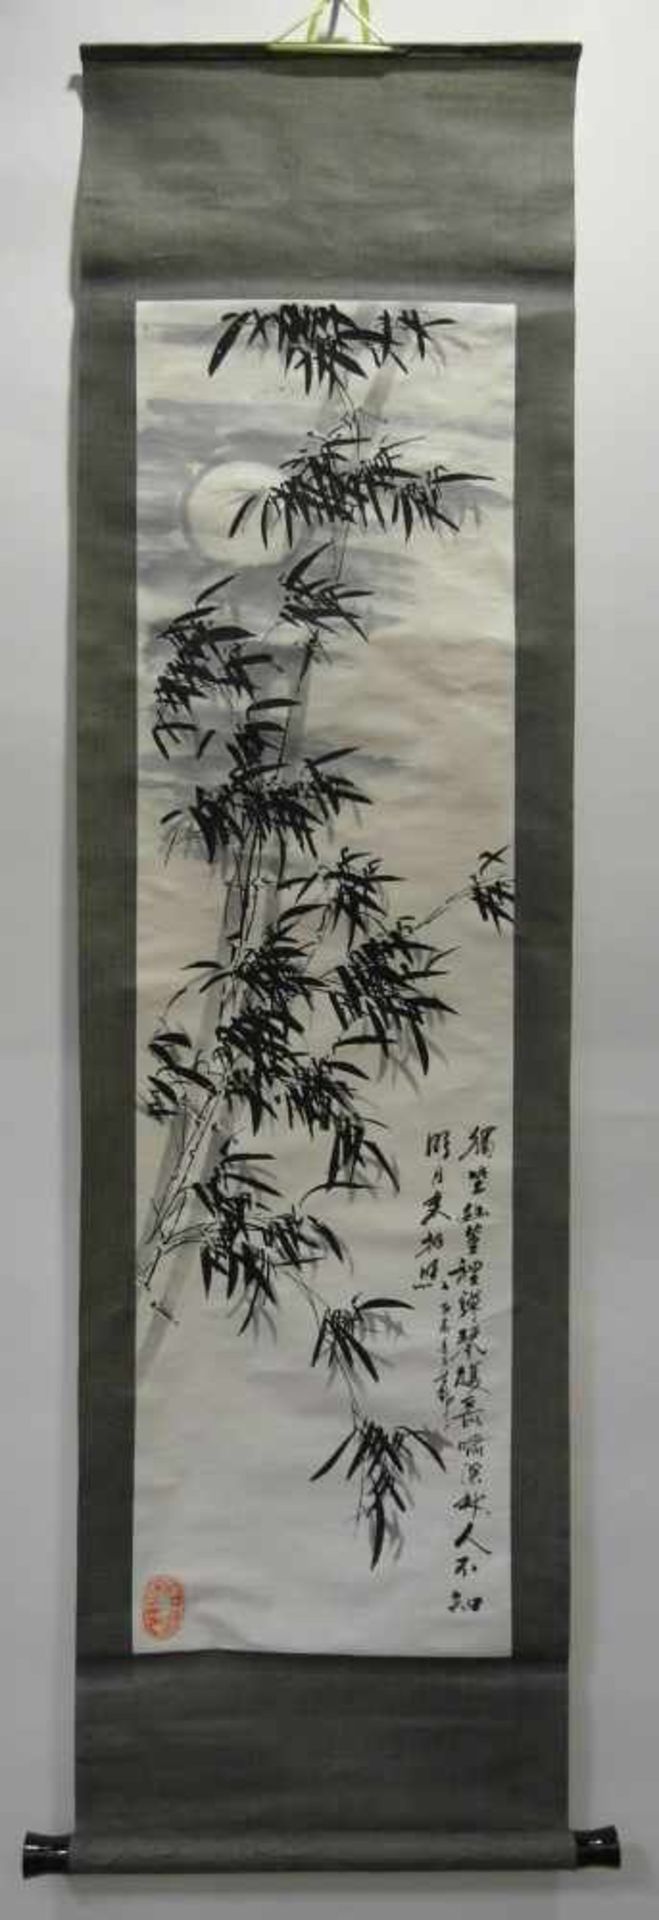 LIU, HAISU1896 Shangzhou - 1994. Bamboo. China. 1941 resp. 1943. Ink on paper. 136x33.5cm. . - Bild 3 aus 3